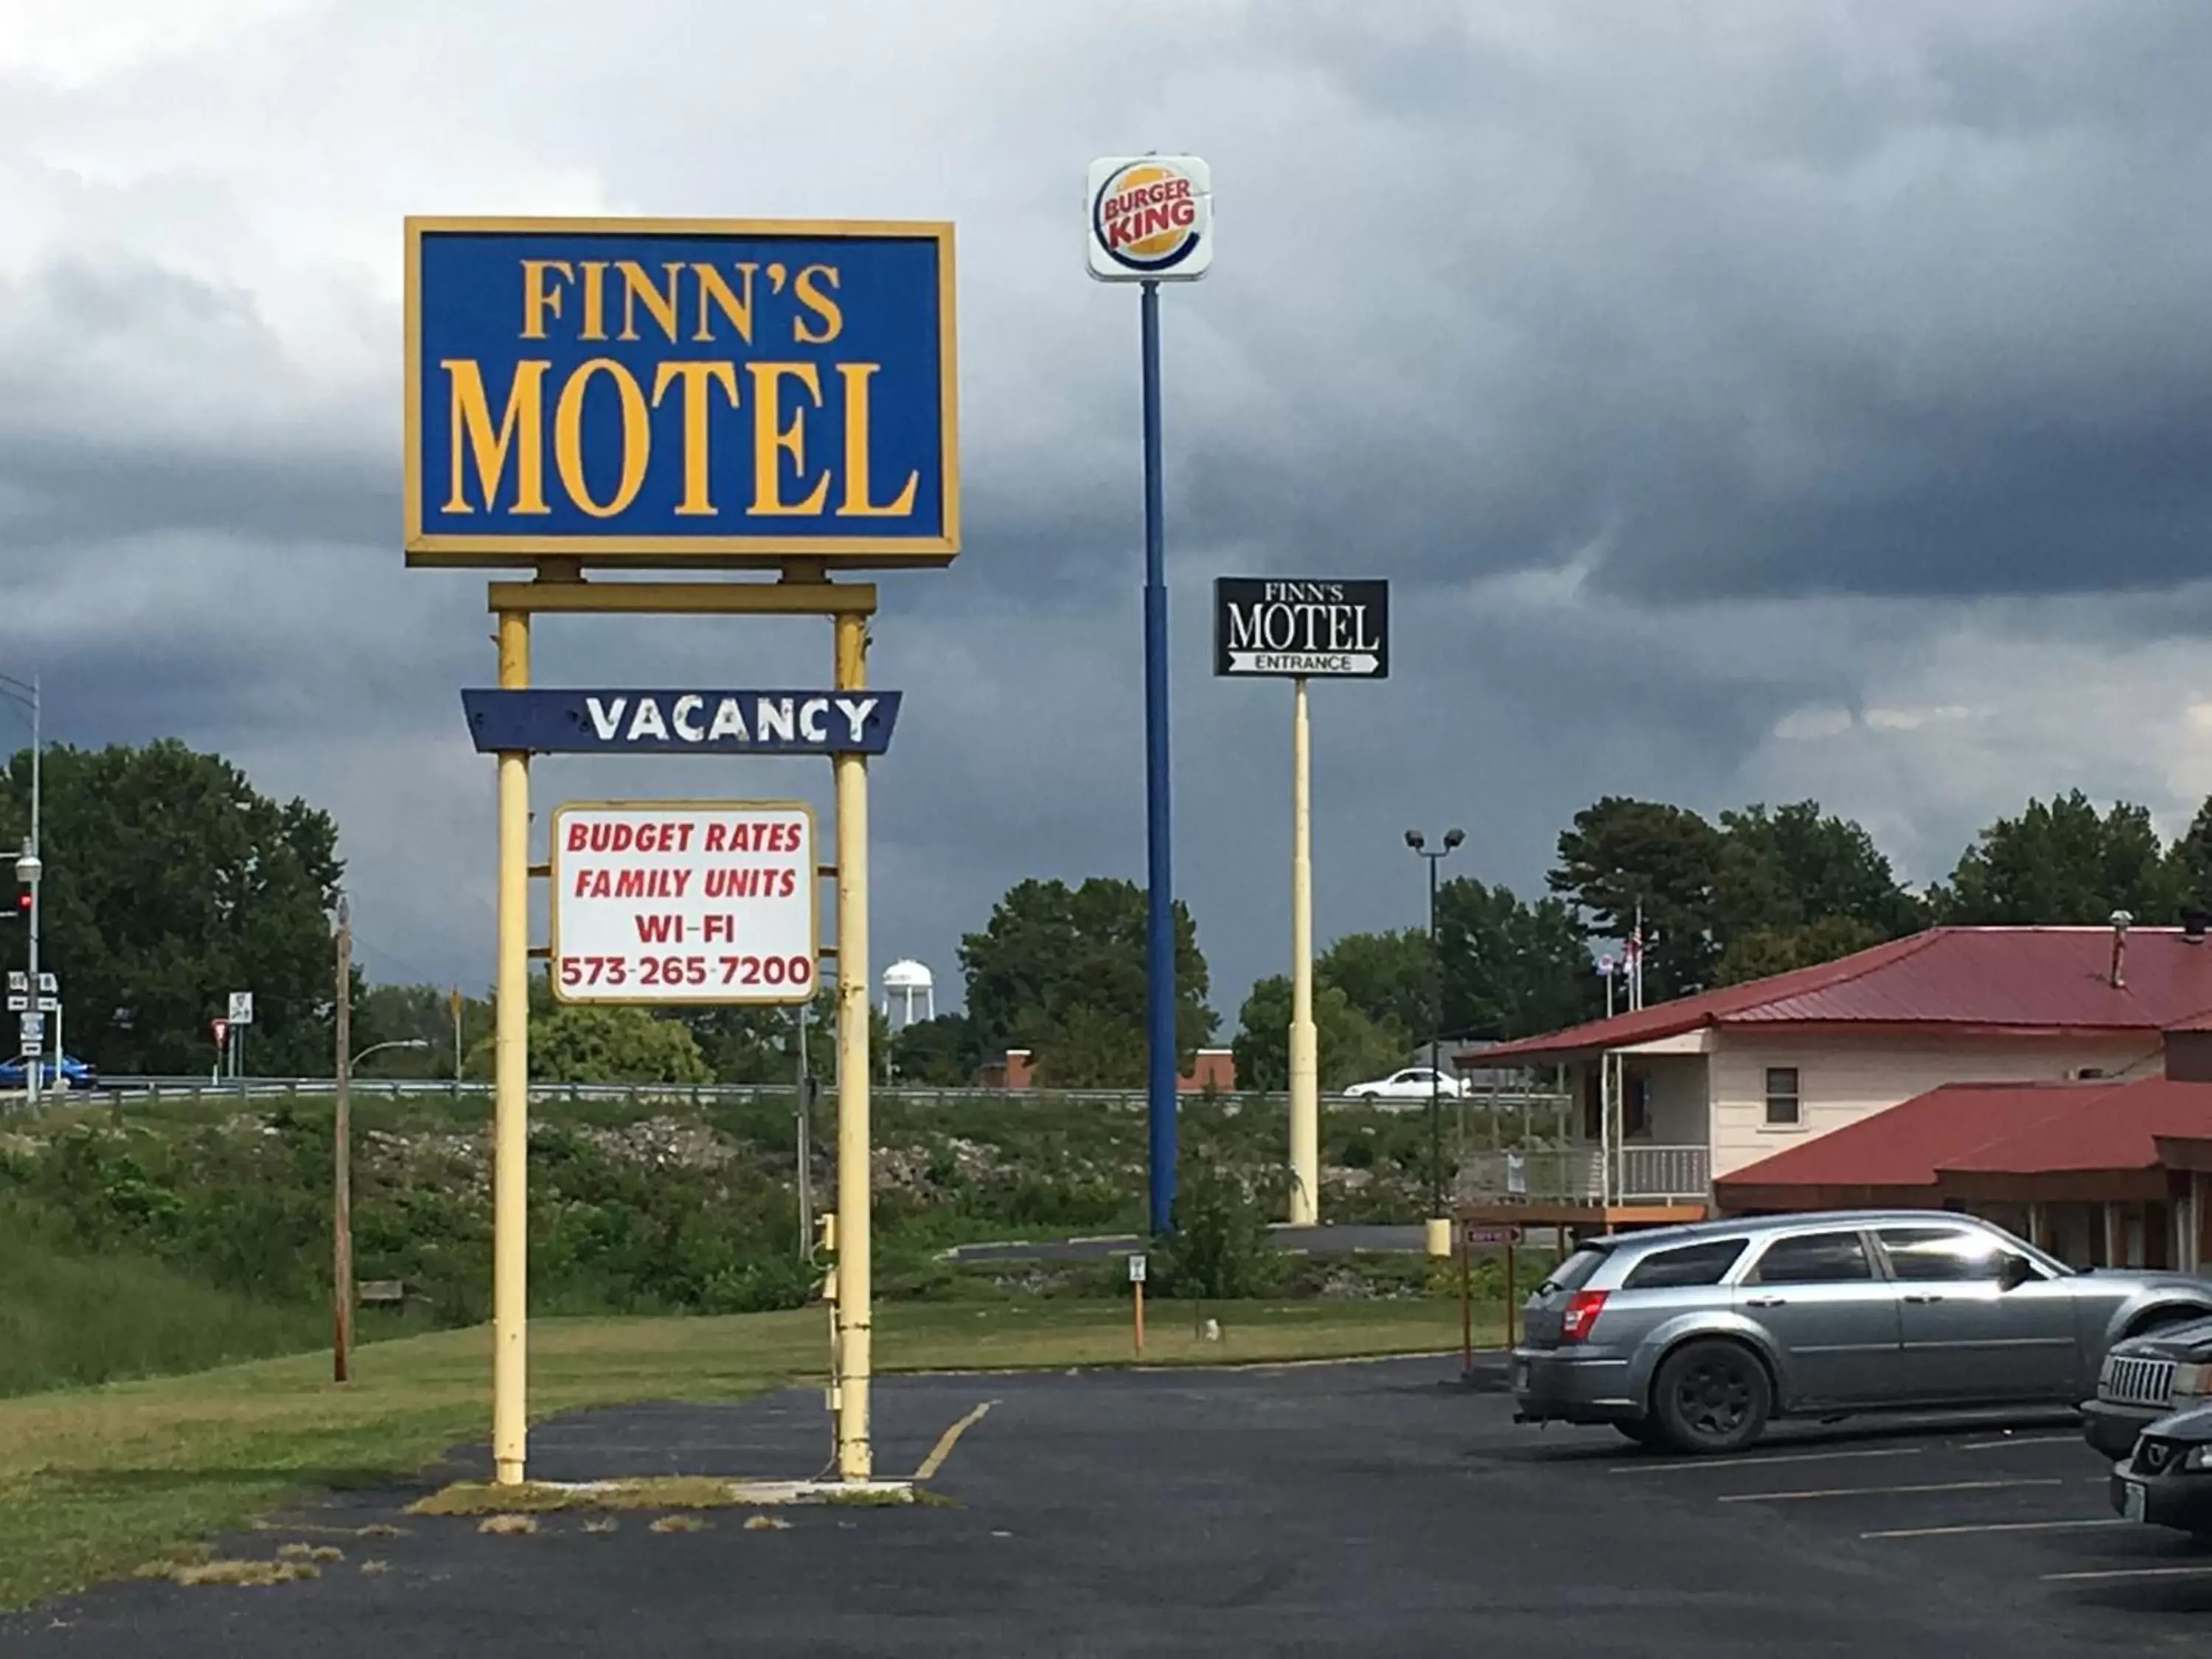 Property logo or sign in Finn's Motel